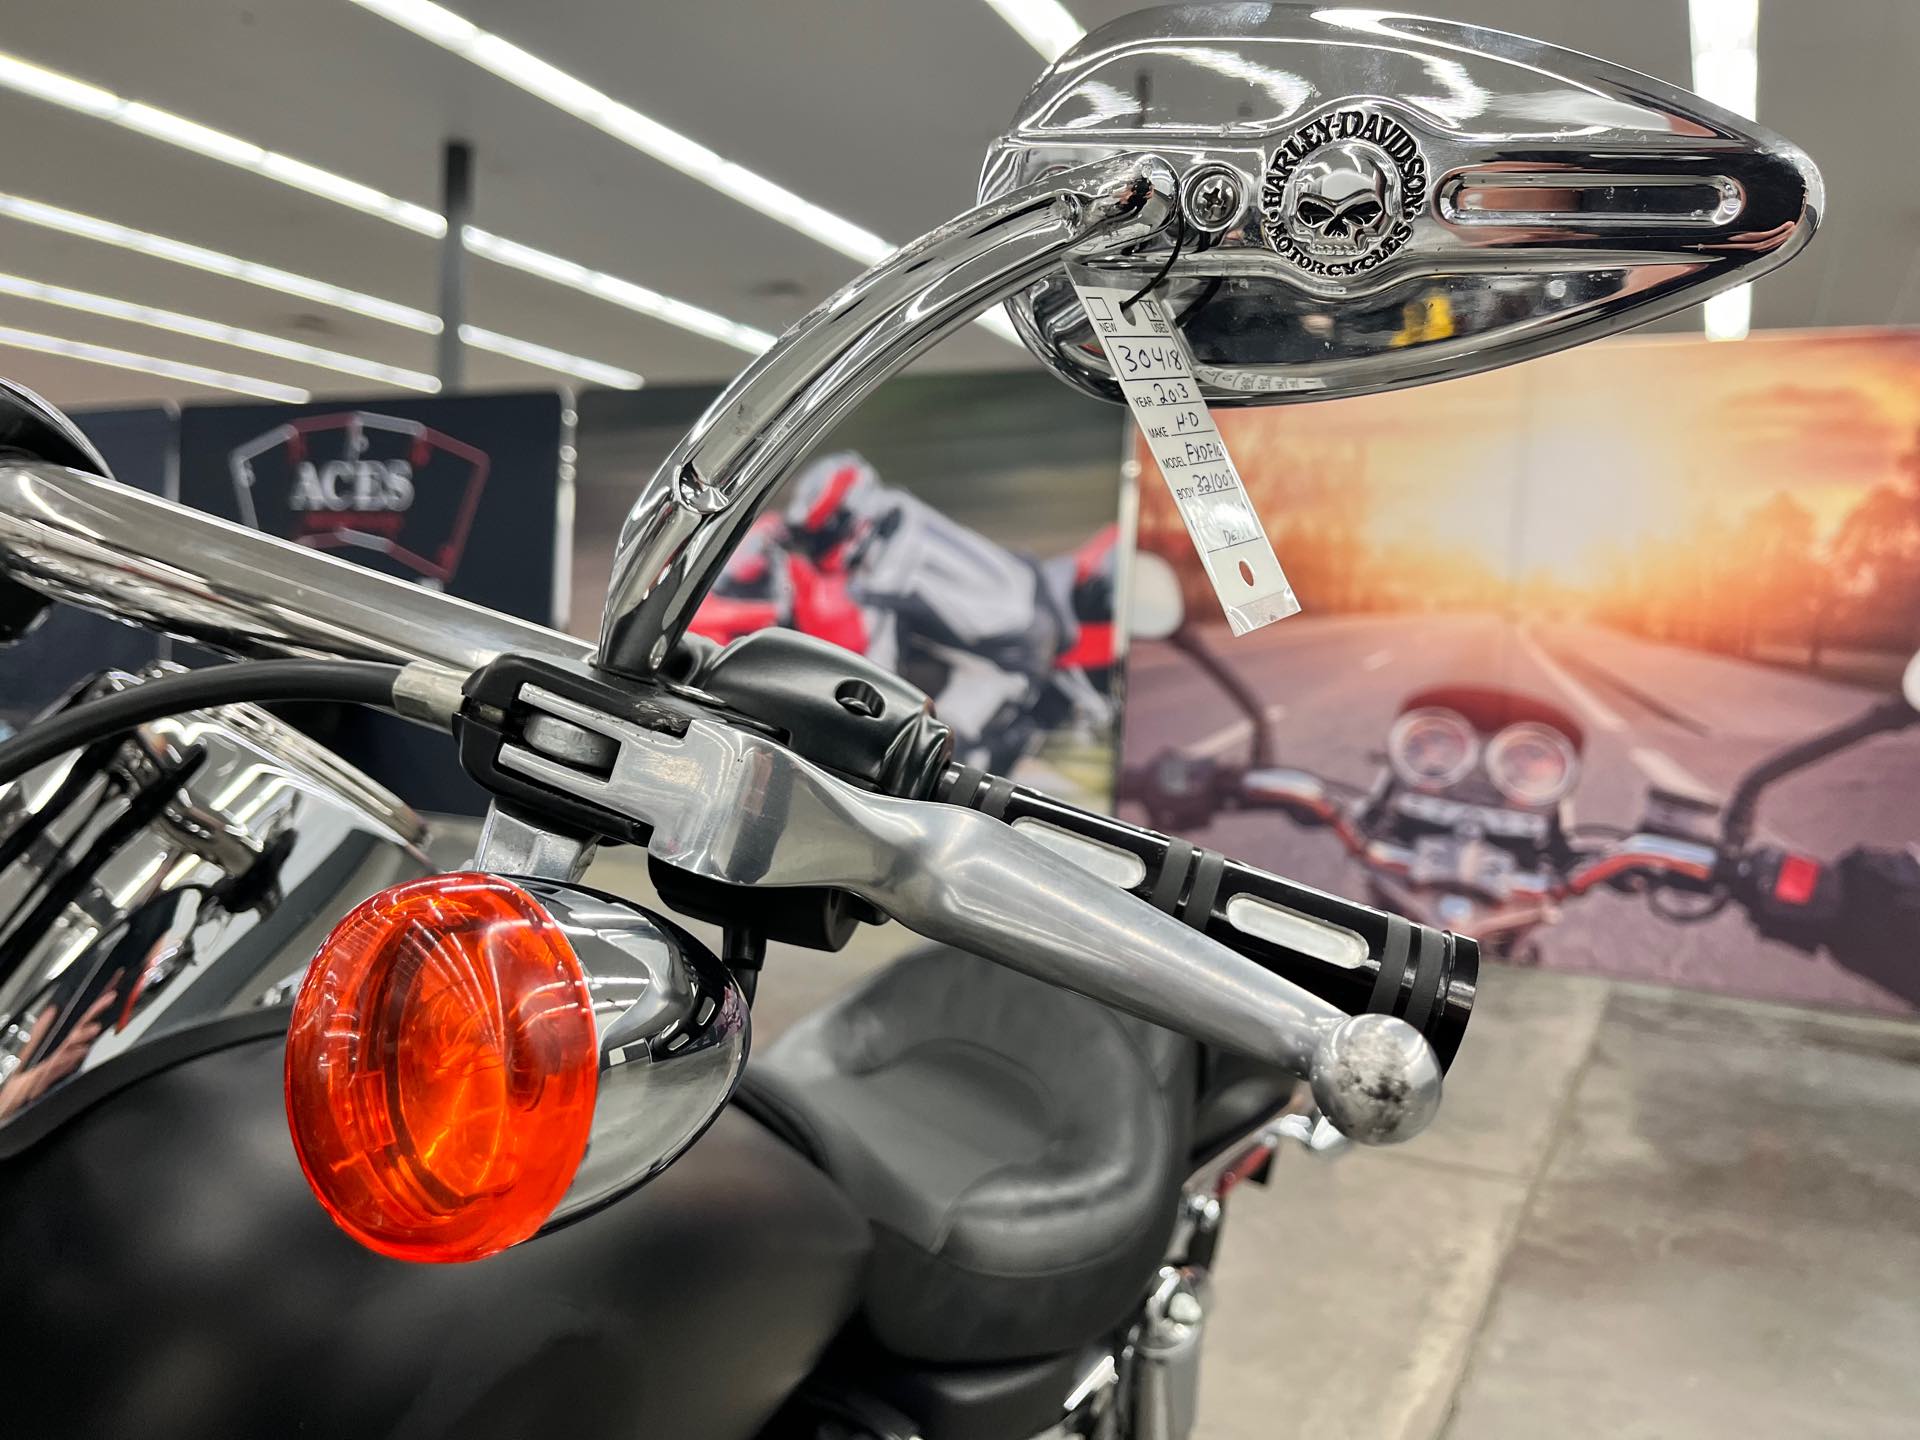 2013 Harley-Davidson Dyna Fat Bob at Aces Motorcycles - Denver